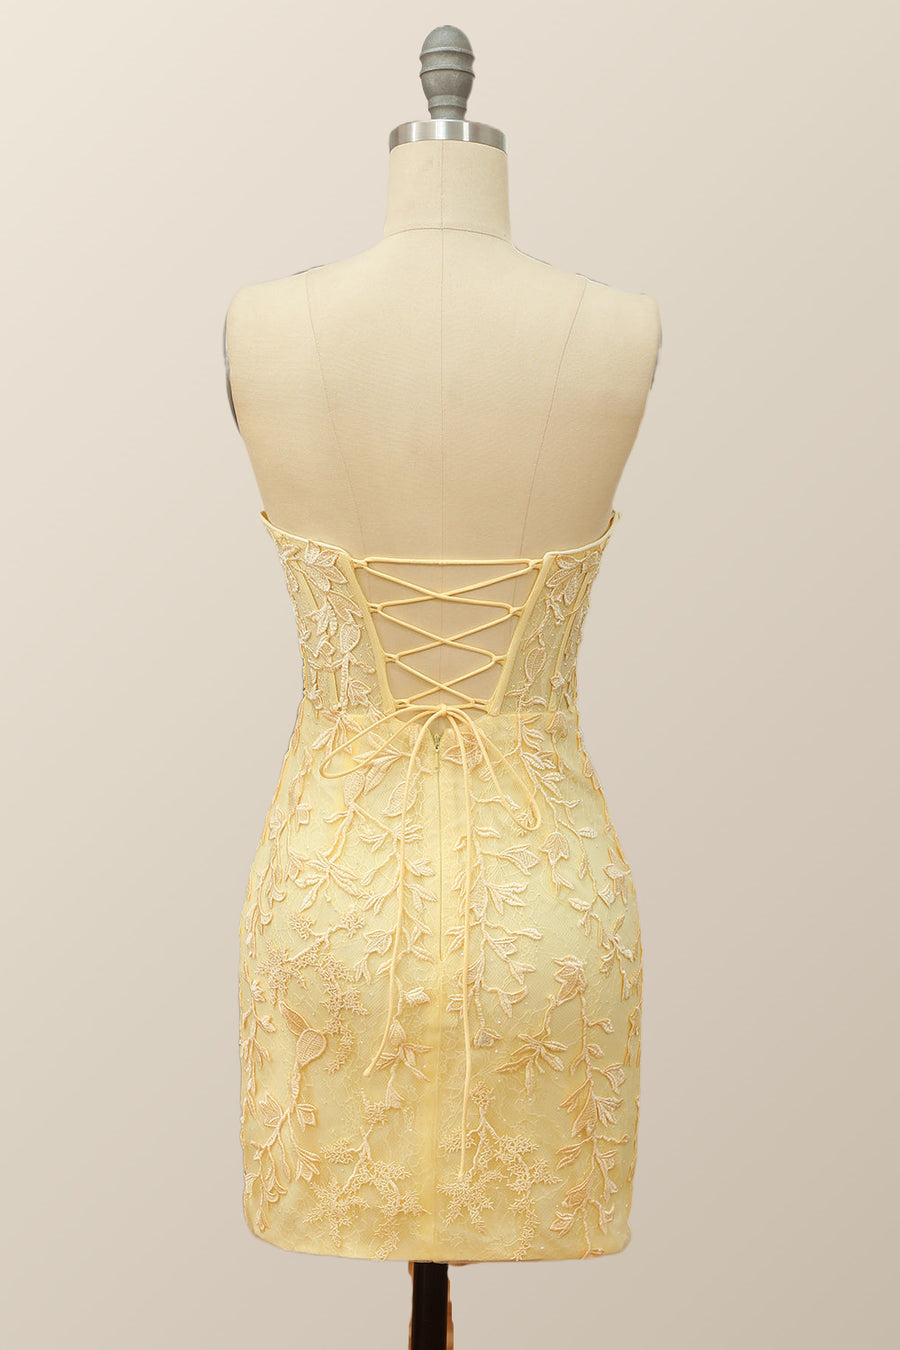 Sweetheart Lavender Lace Bodycon Mini Dress